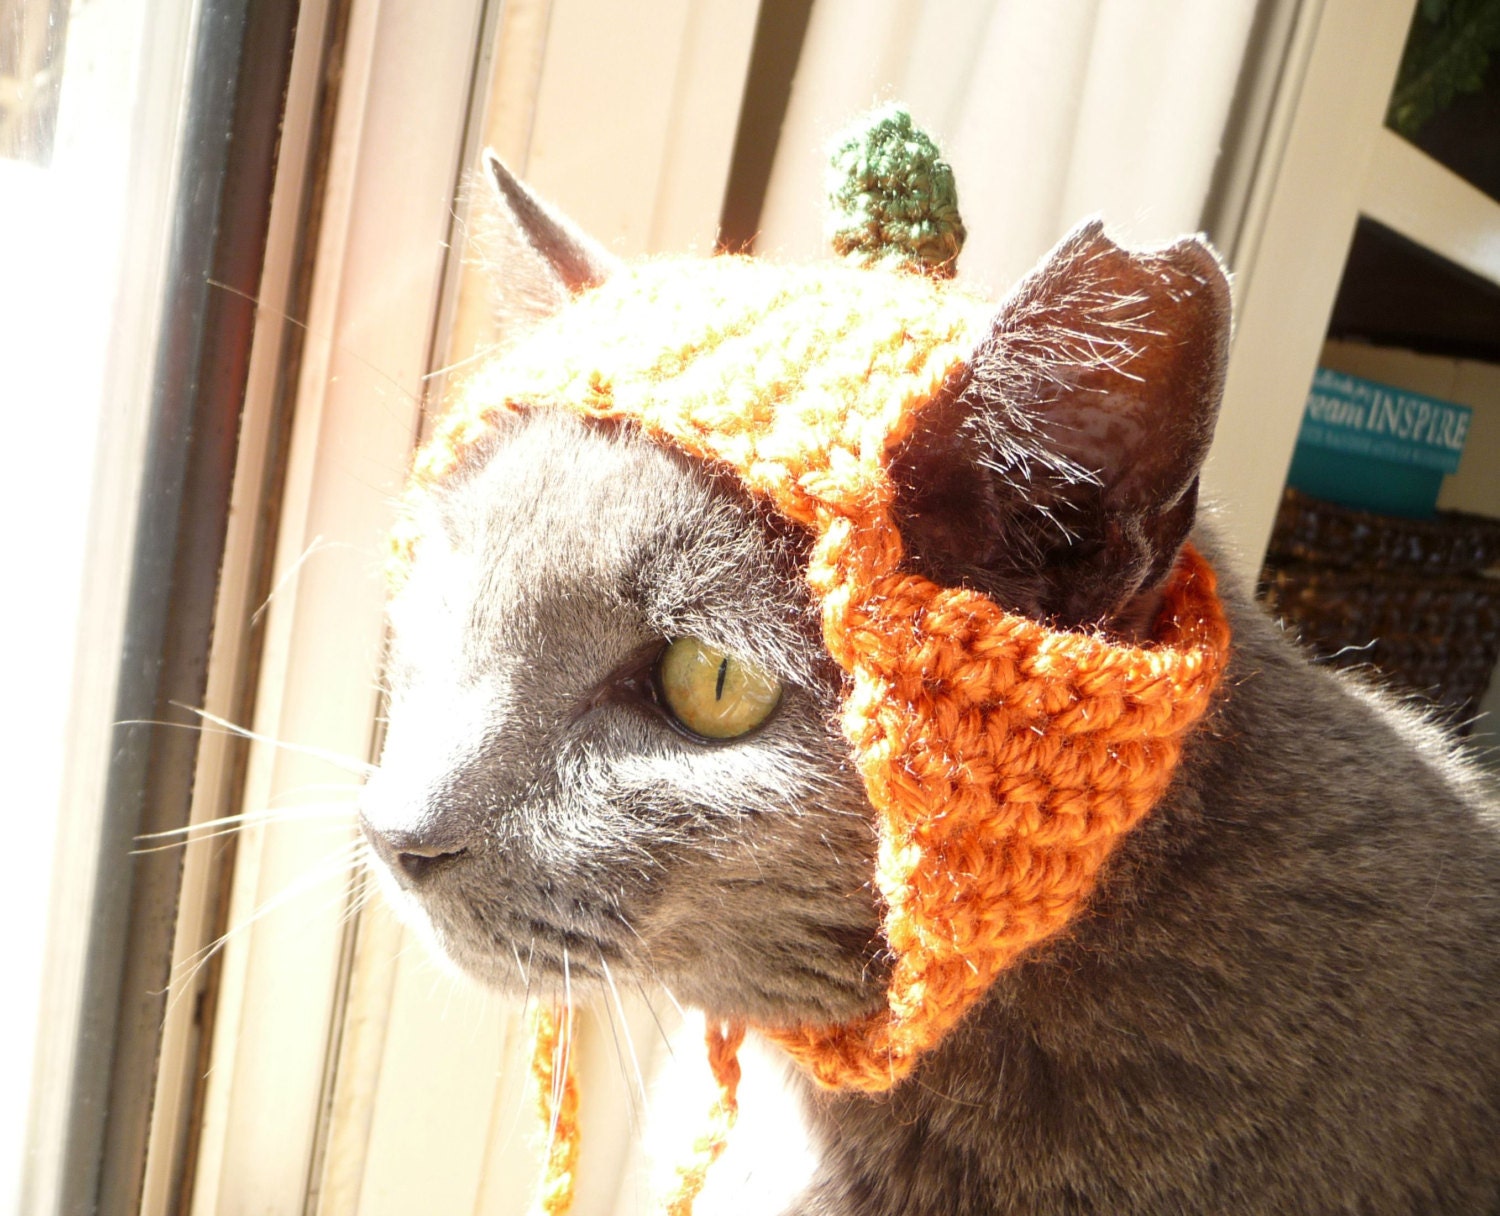 Pumpkin cat hat cat costumes hats for cats cat clothing cat accessories pet supplies pet accessories pet clothings